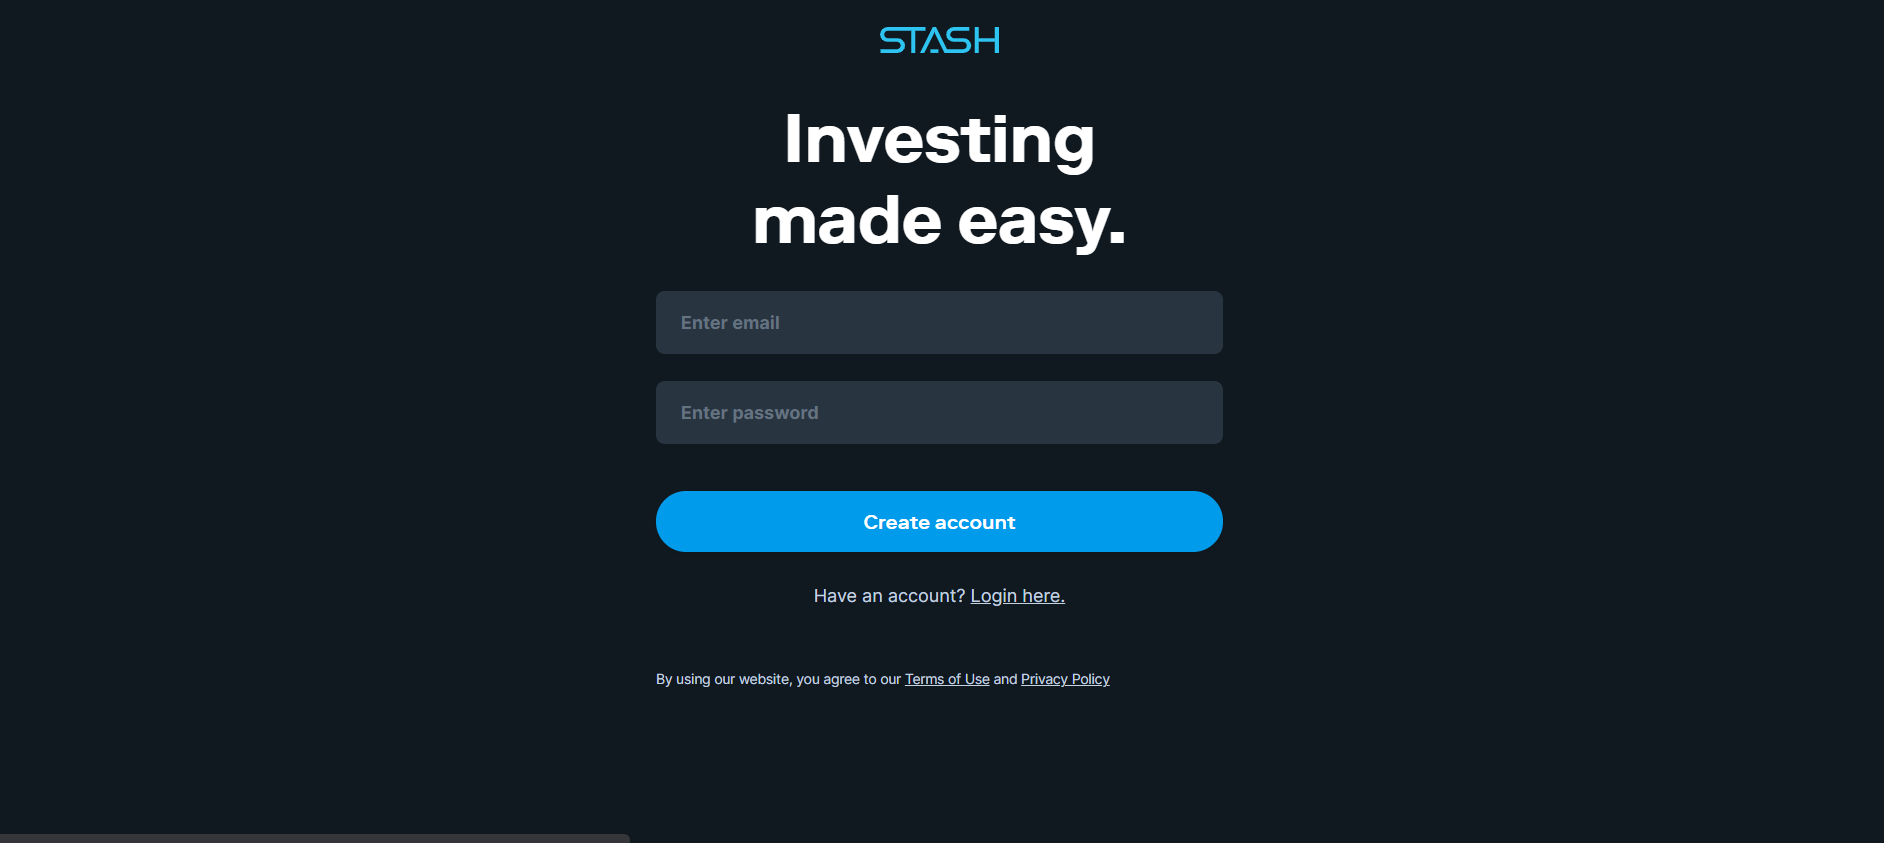 Stash-invest application process 1